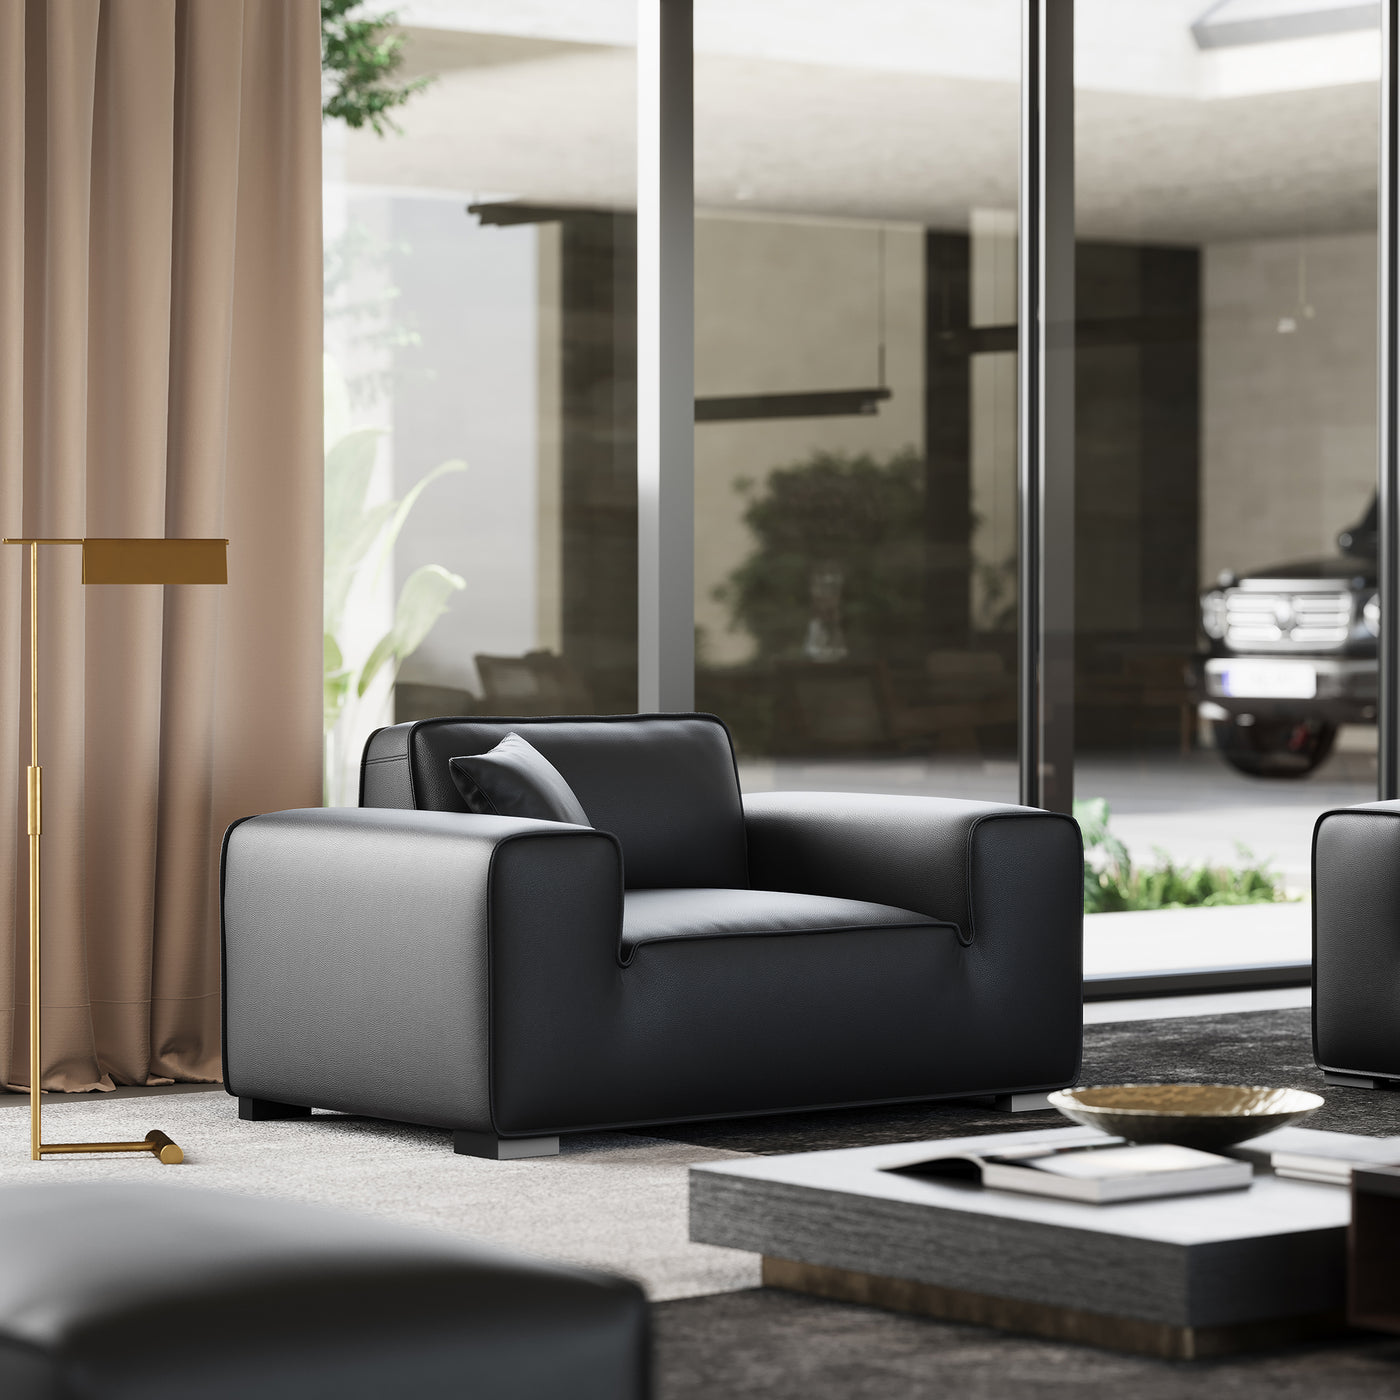 Domus Modular Black Leather Sofa Set-Black